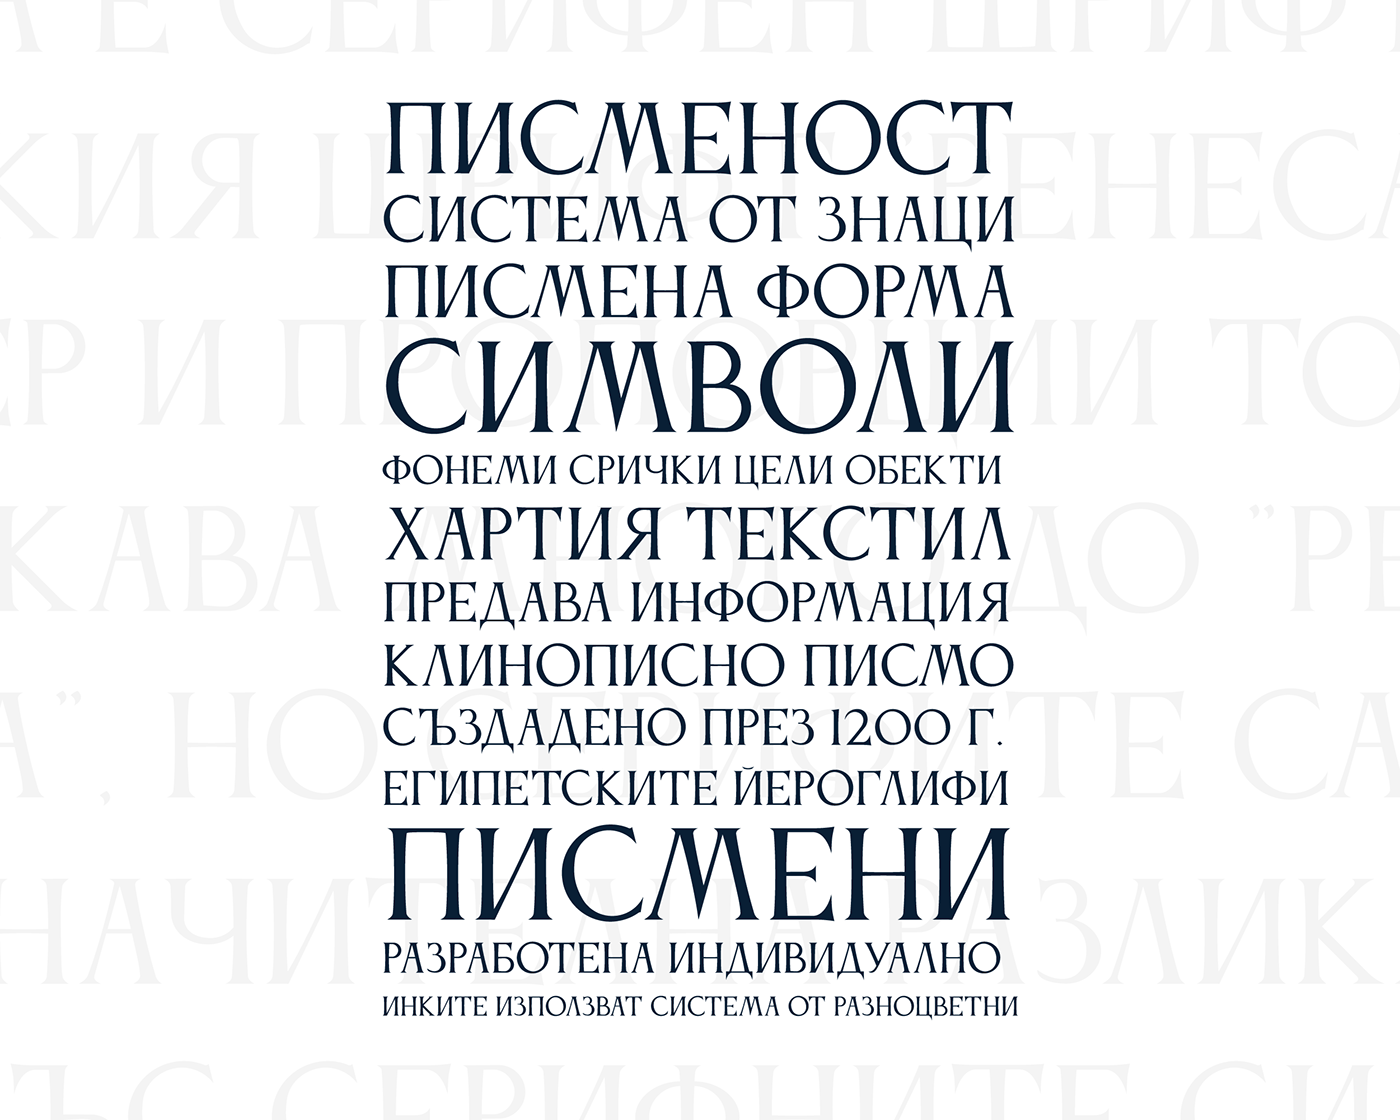 Anticva Free Font - cyrillic